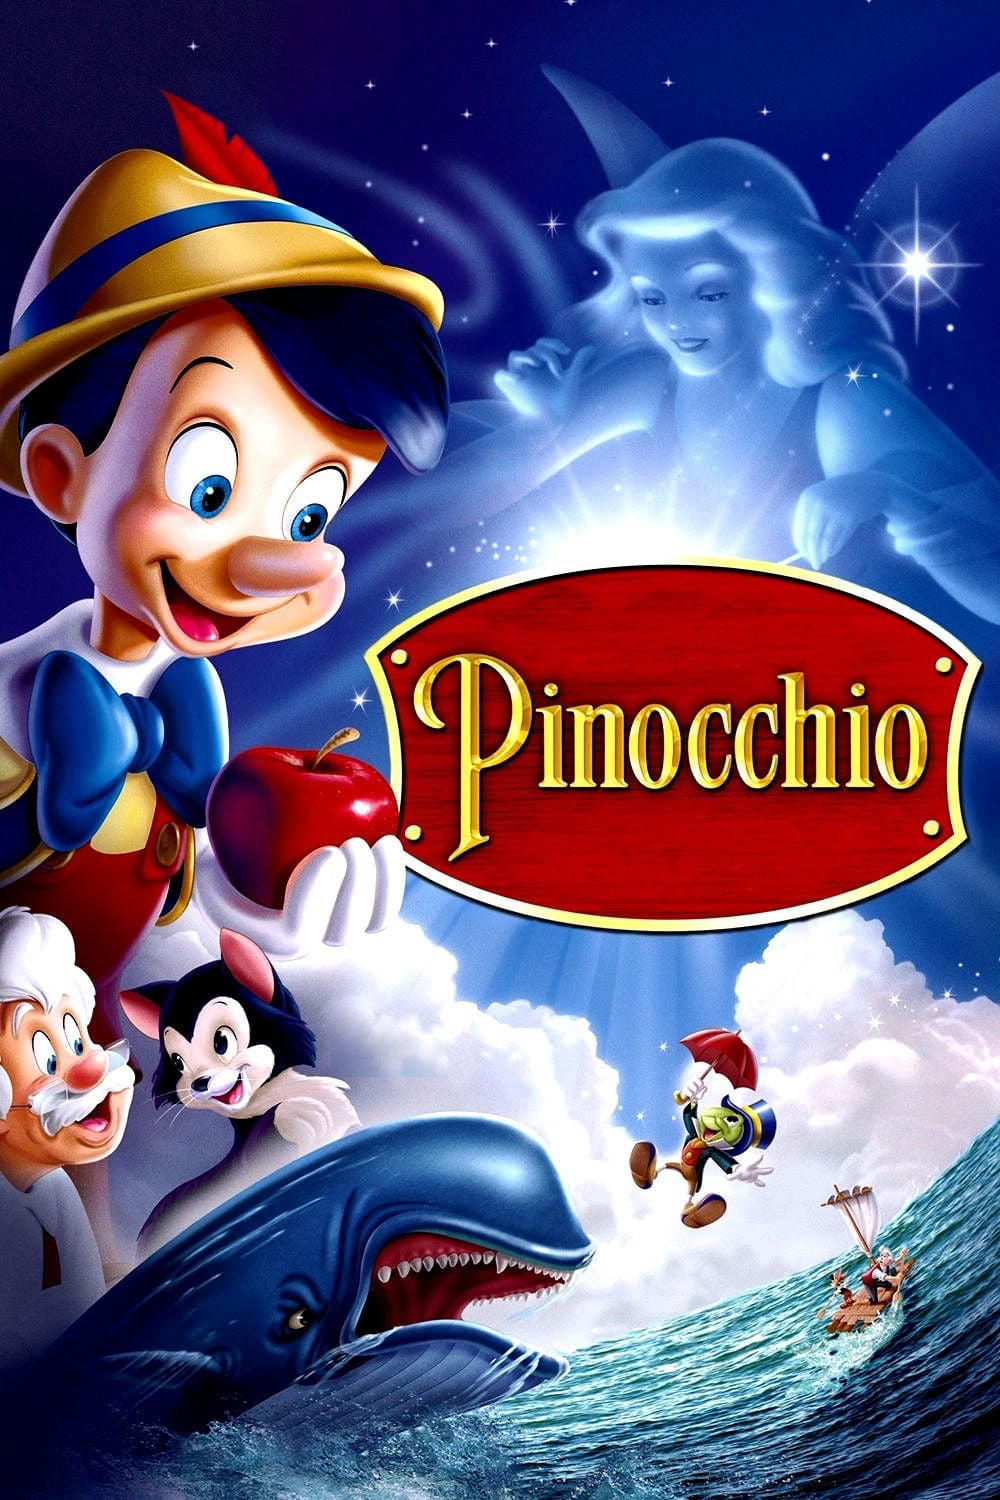 Poster Phim Cậu Bé Người Gỗ (Pinocchio)